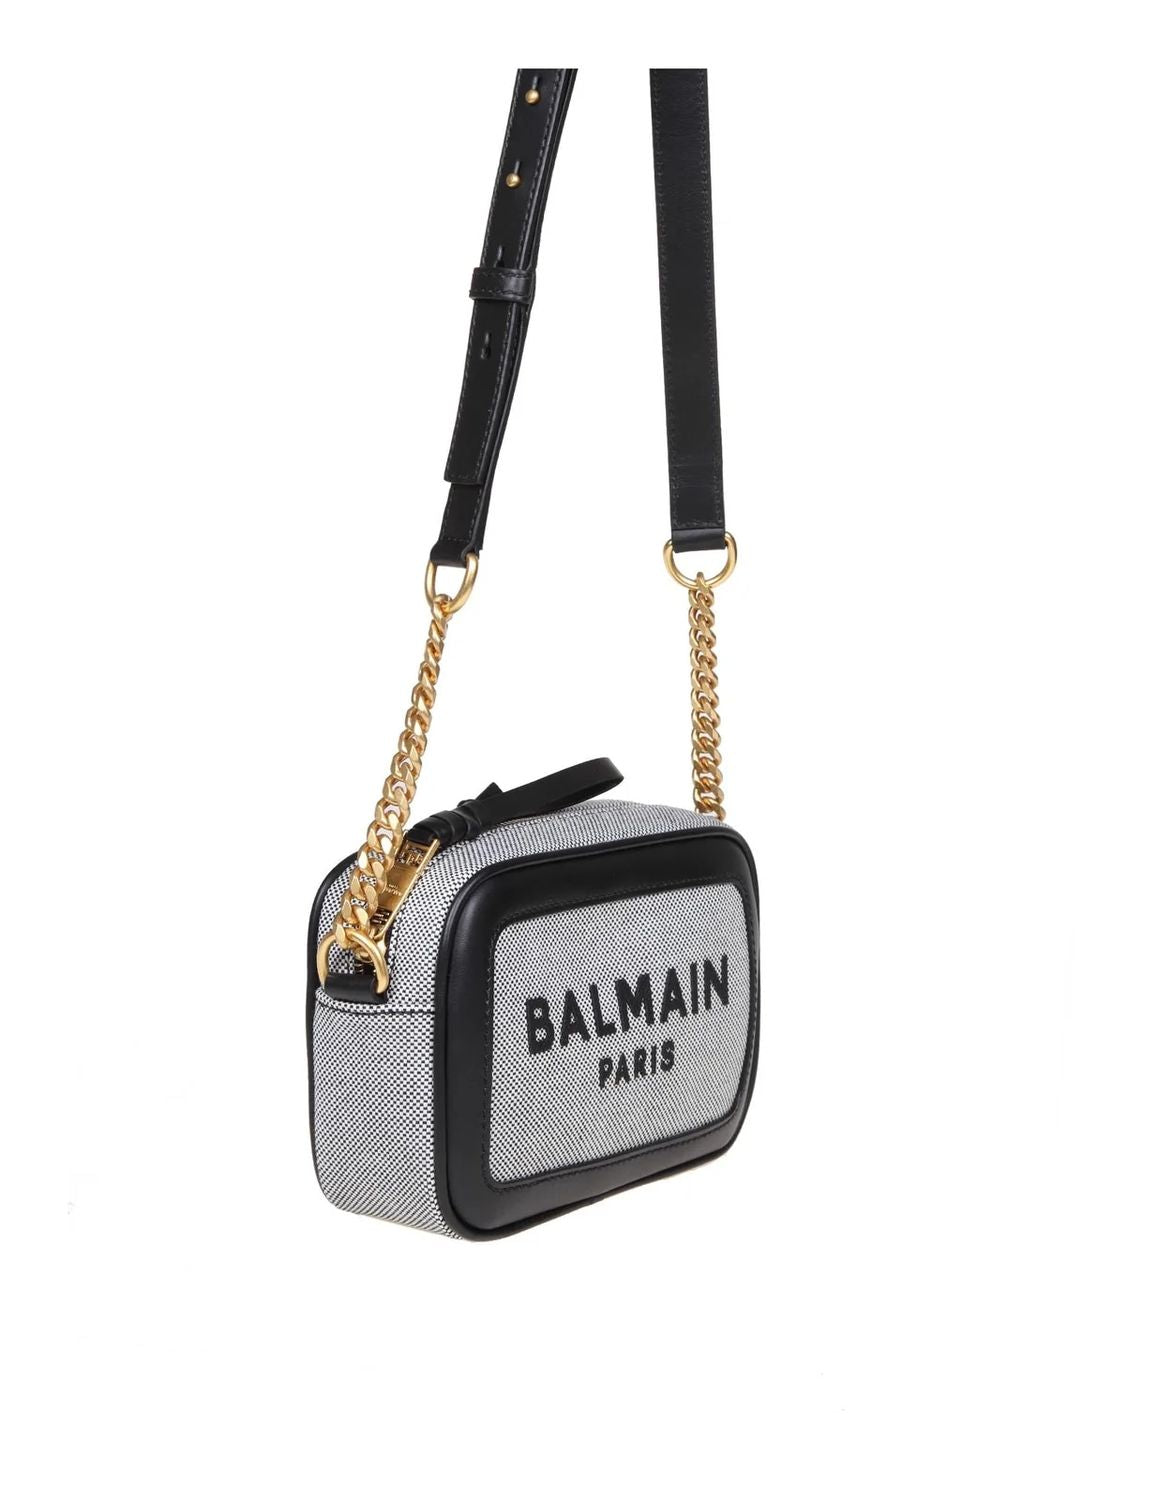 BALMAIN B-Army Camera Handbag - Crossbody for Women